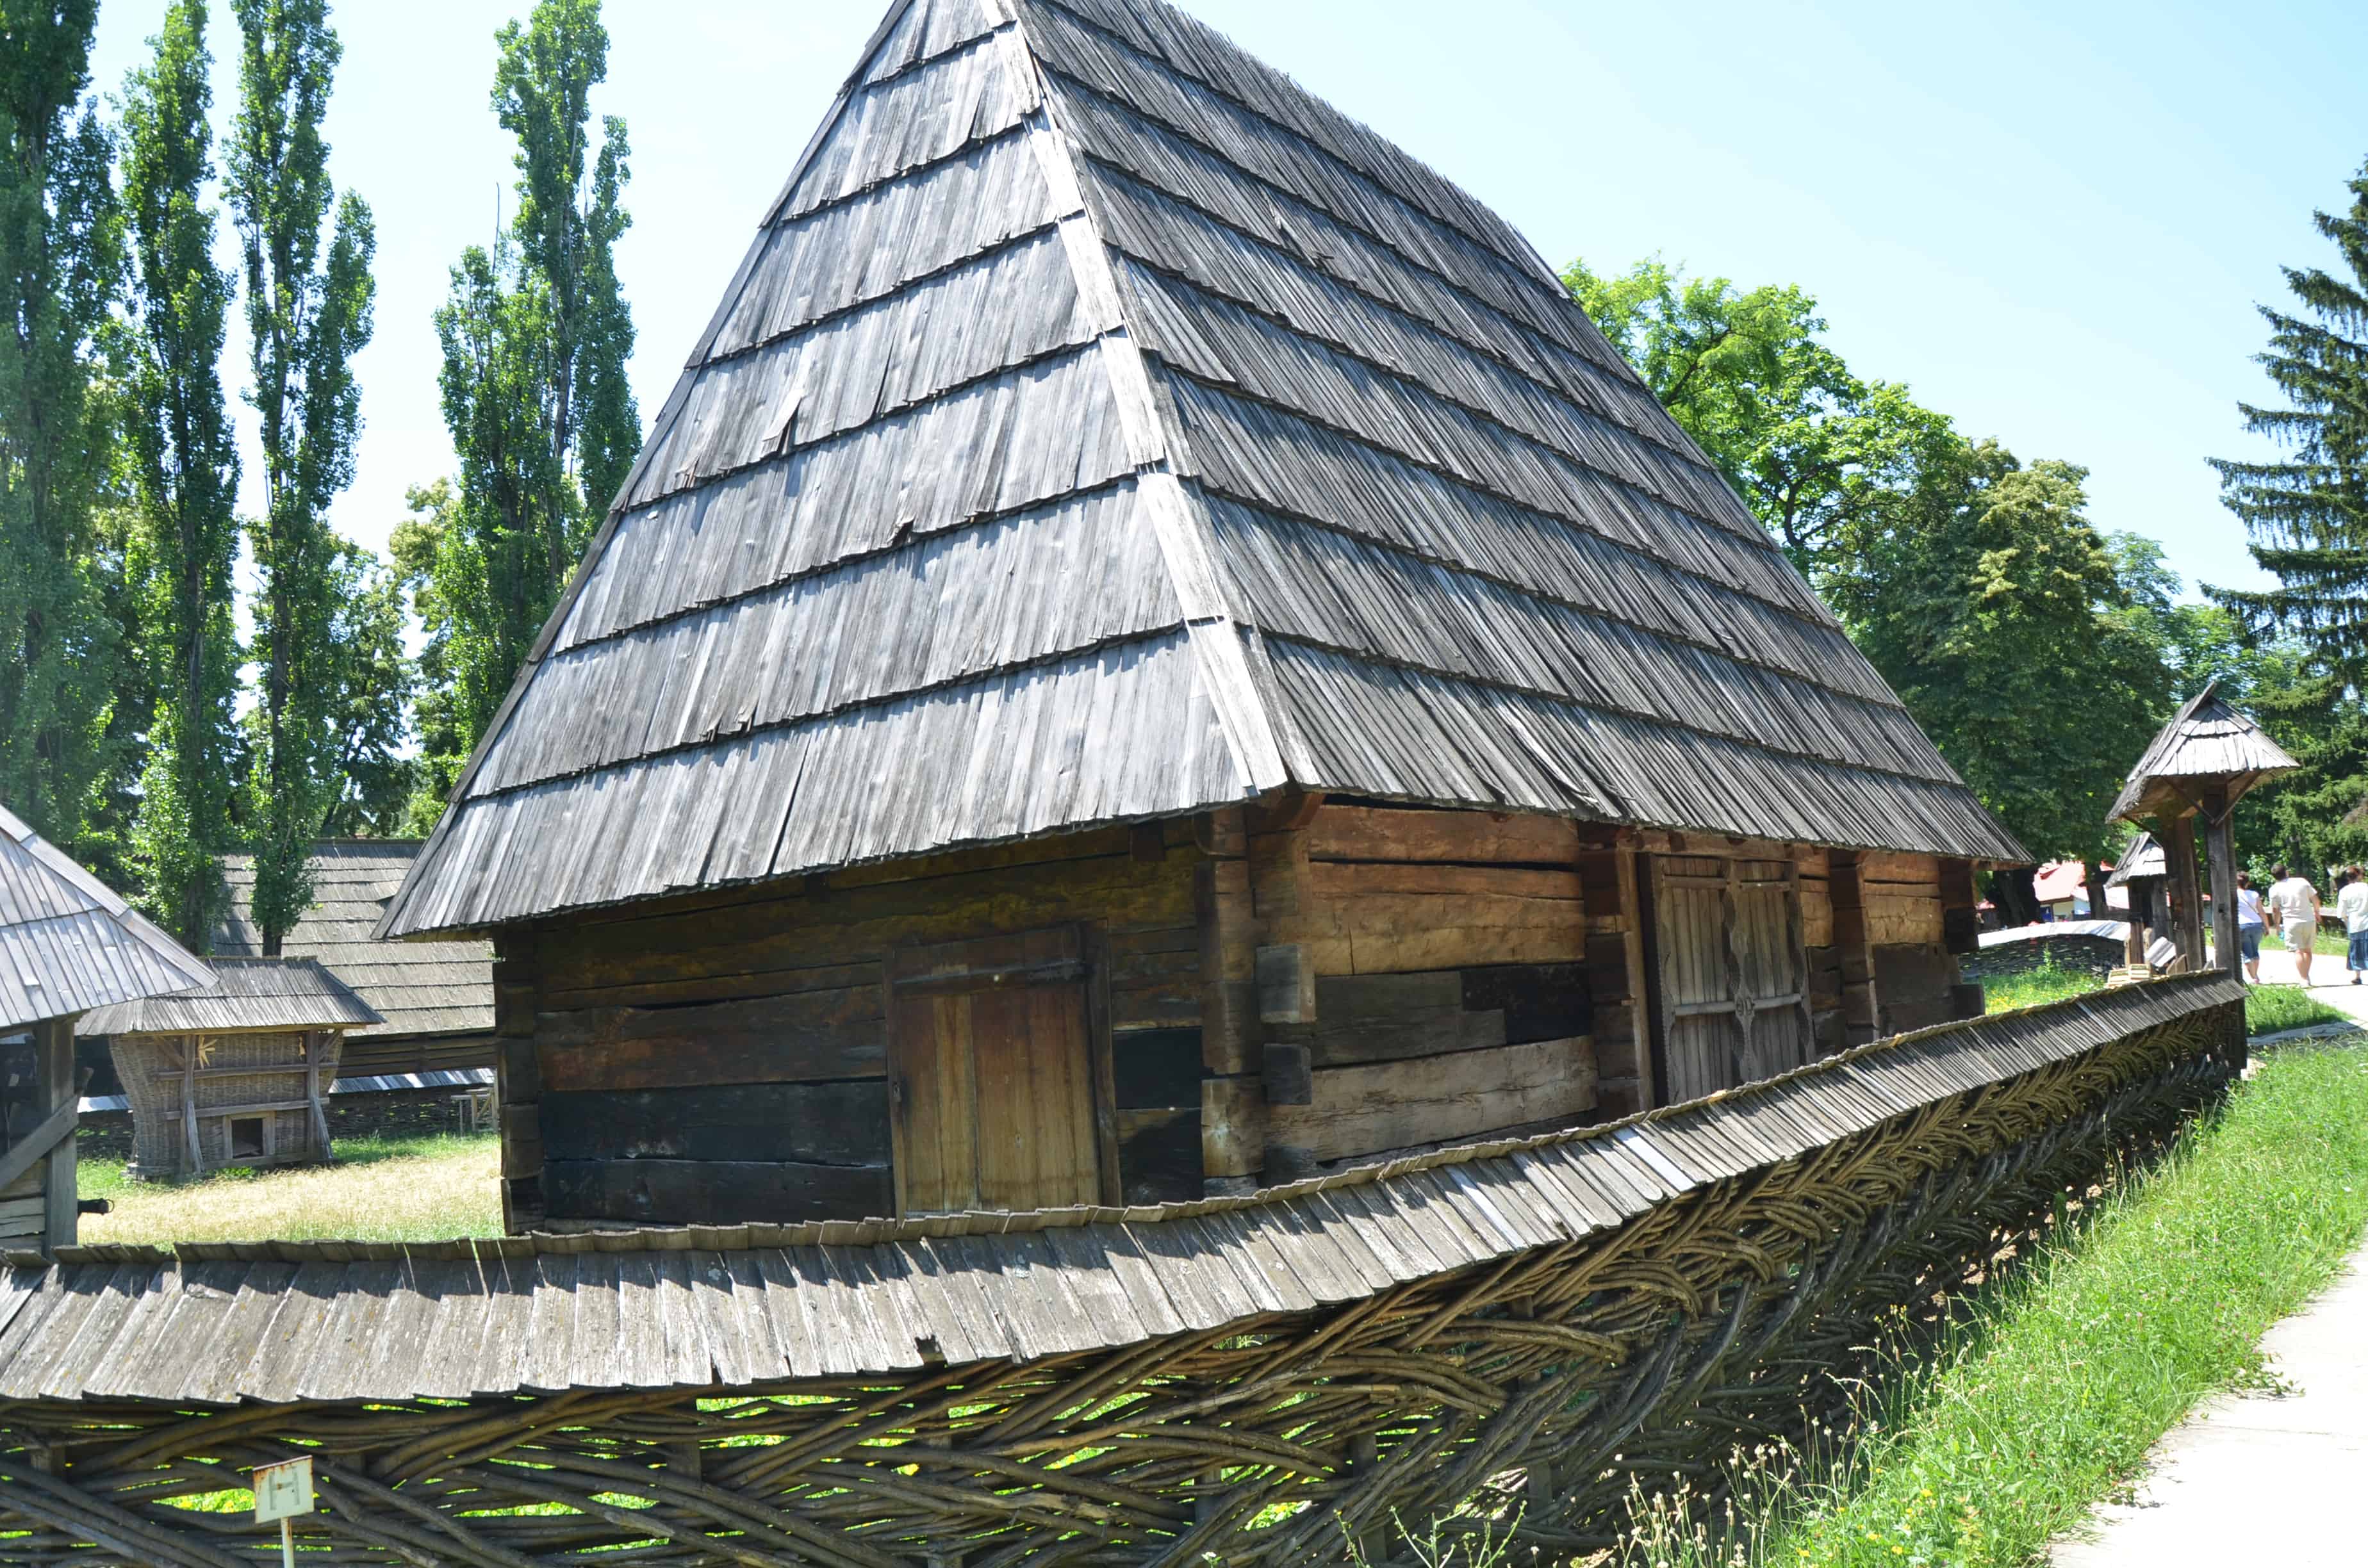 Dimitrie Gusti National Village Museum in Bucharest, Romania